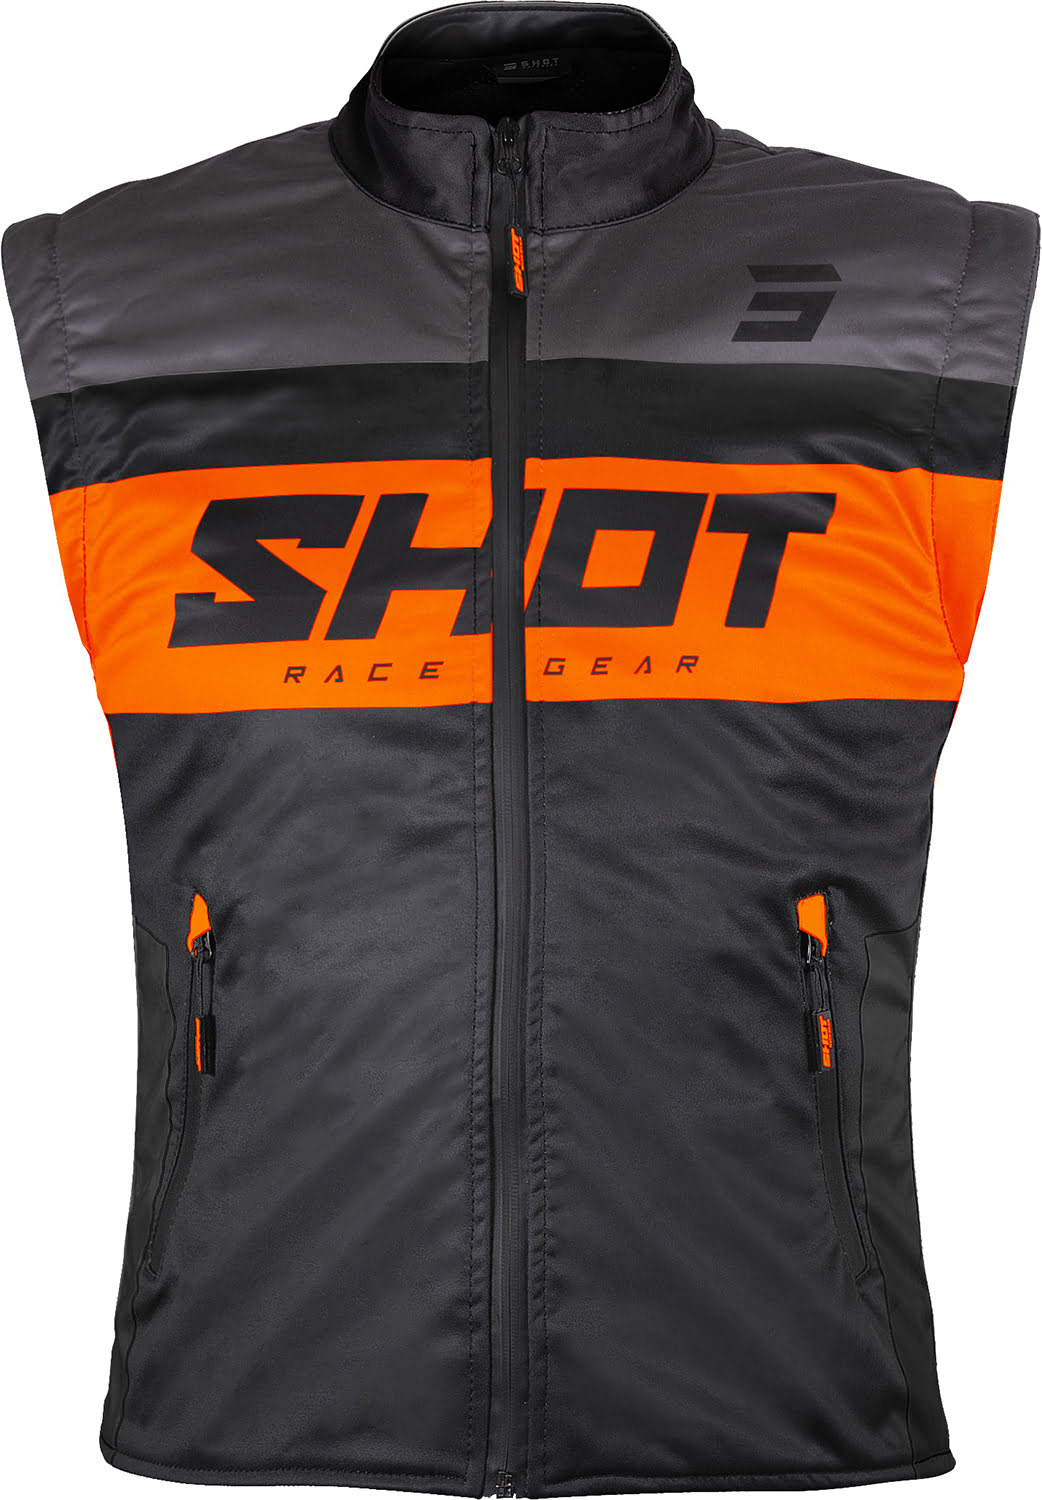 Sleeveless Jacket BODYWARMER LITE 3.0 Black / Orange SHOT - RacePro